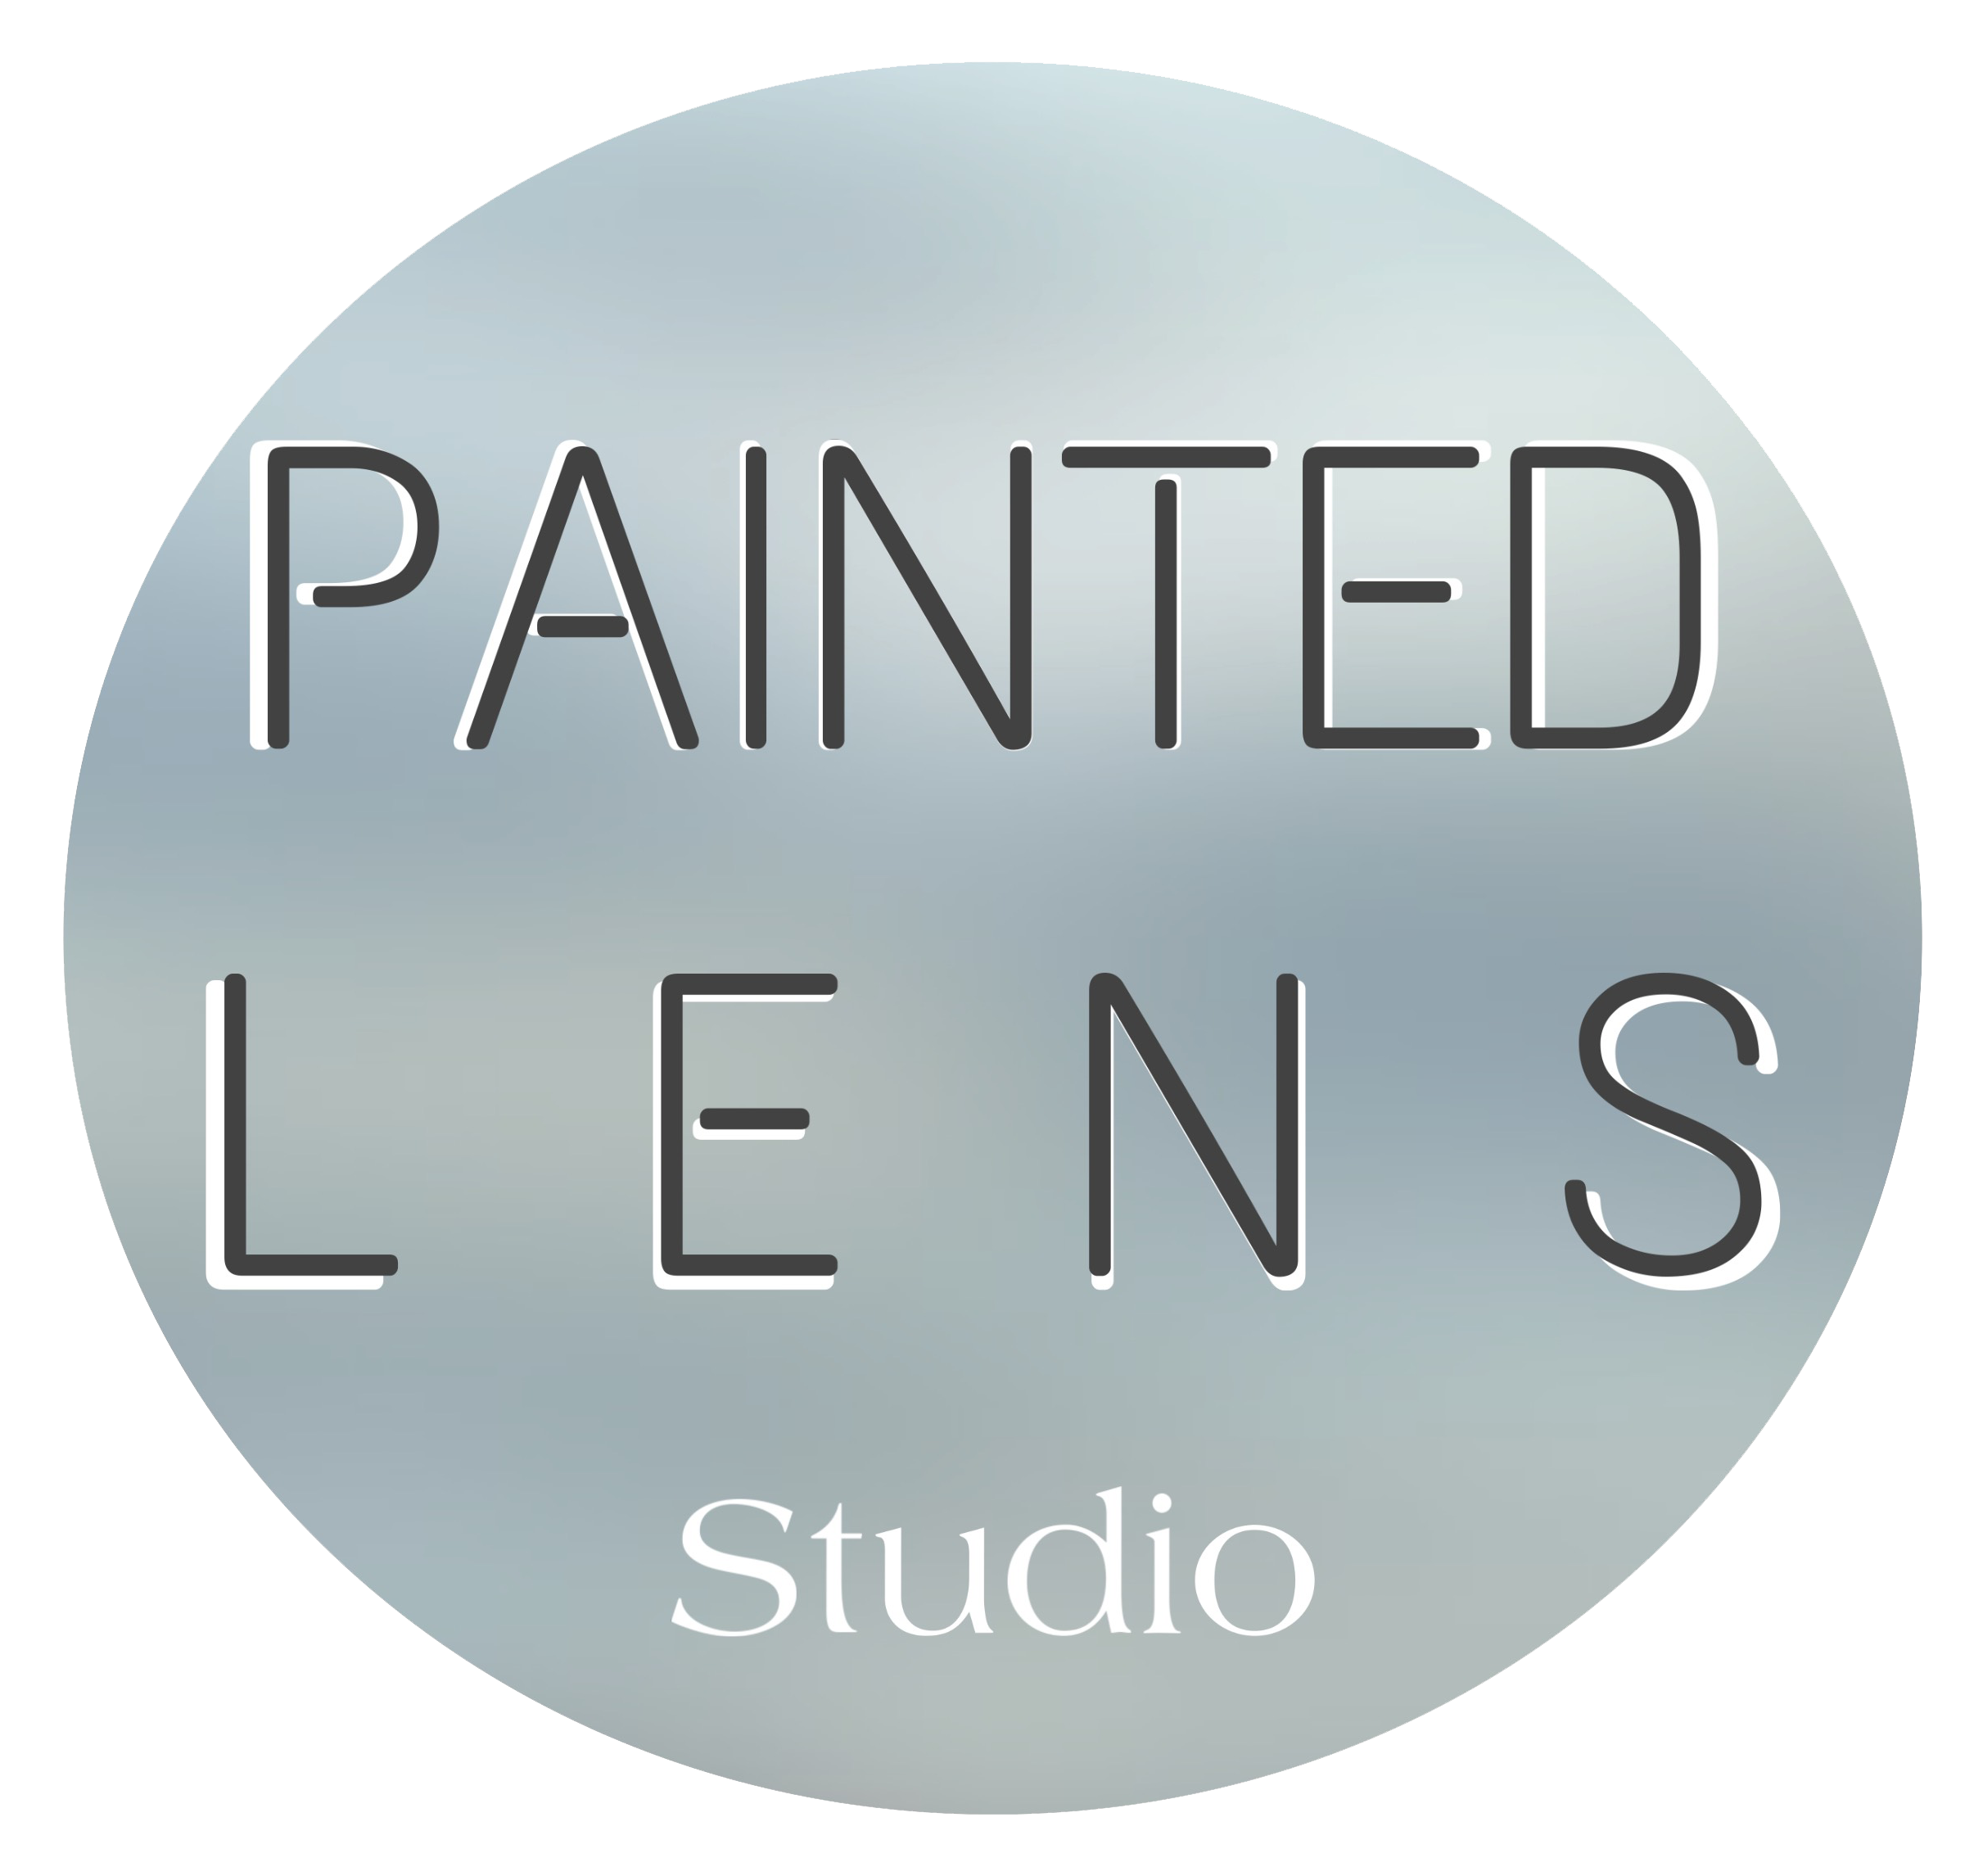 Painted Lens Studio